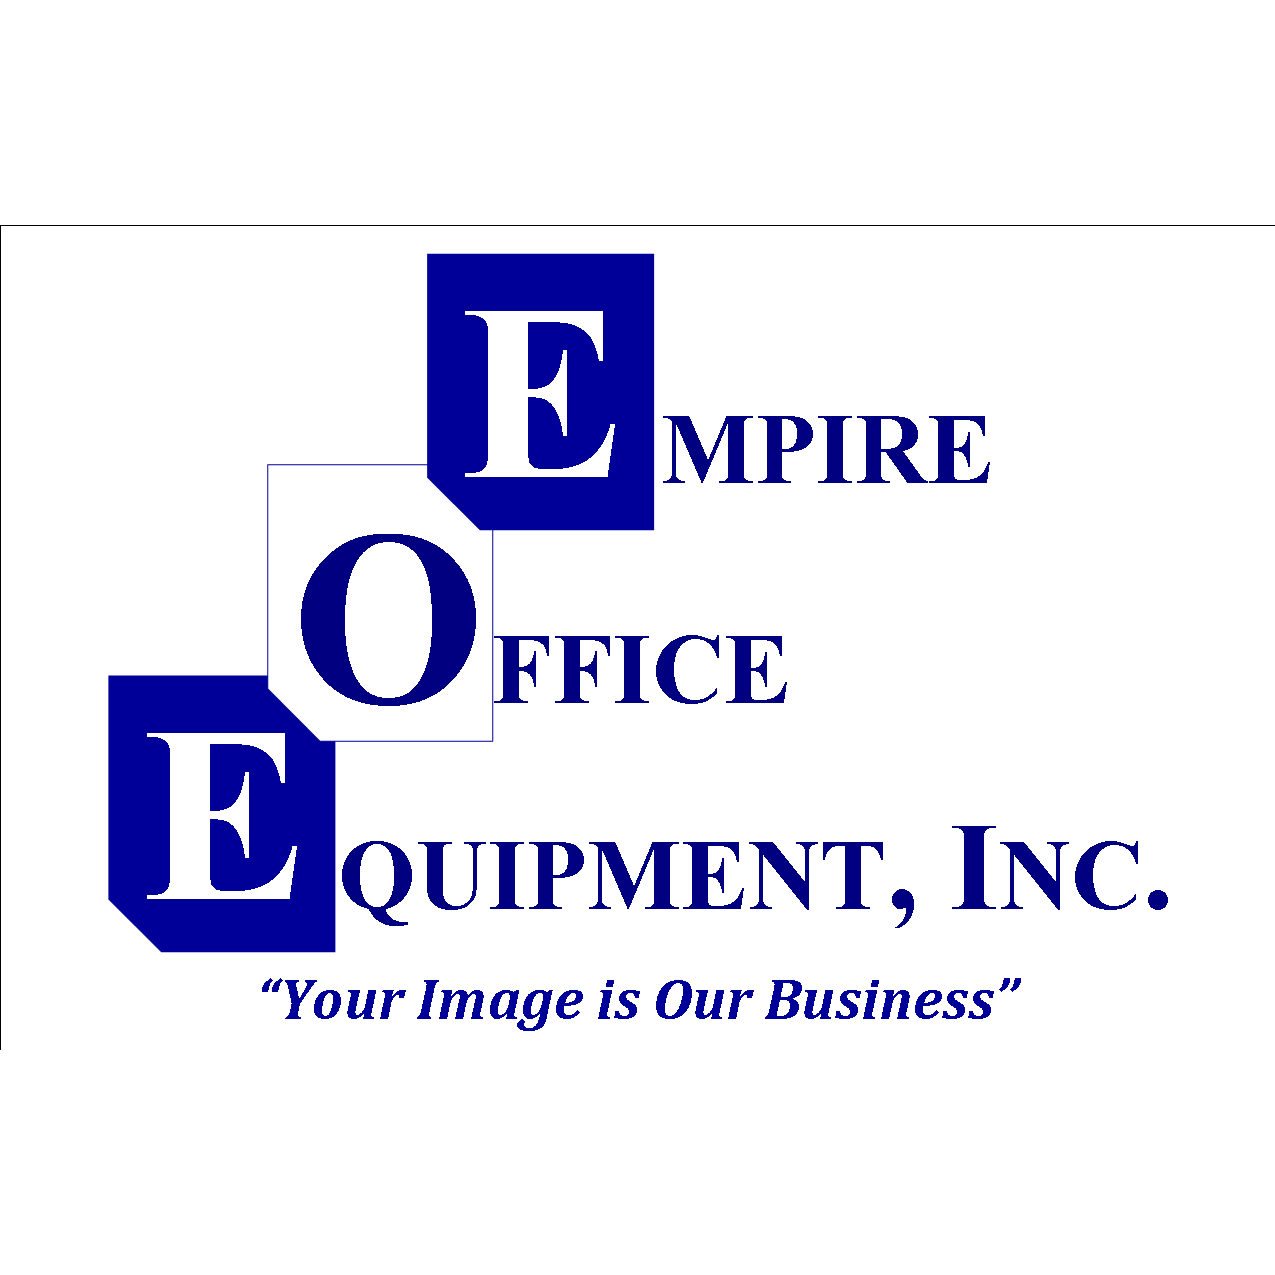 Empire Office Equipment Inc Logo